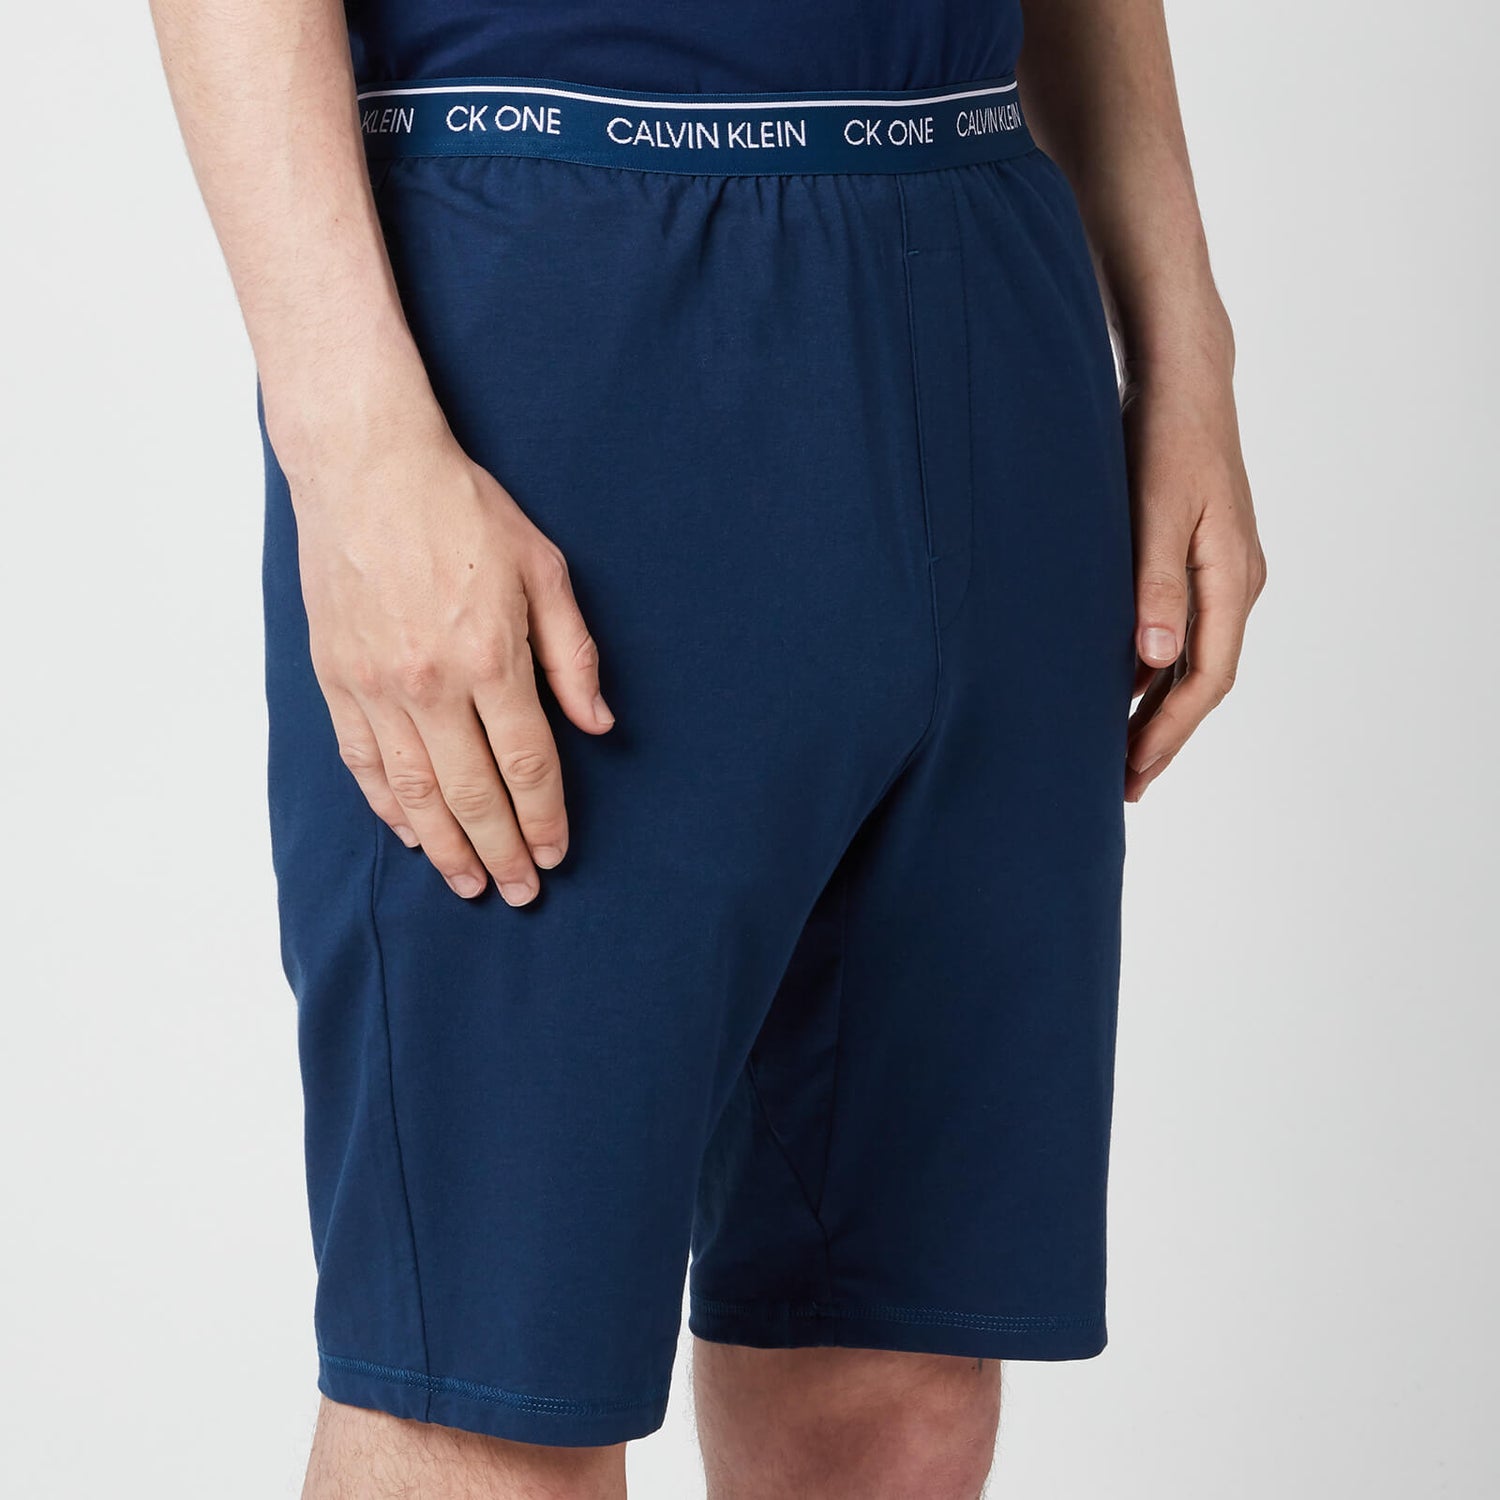 Calvin Klein Men's CK One Lounge Shorts - Lake Crest Blue